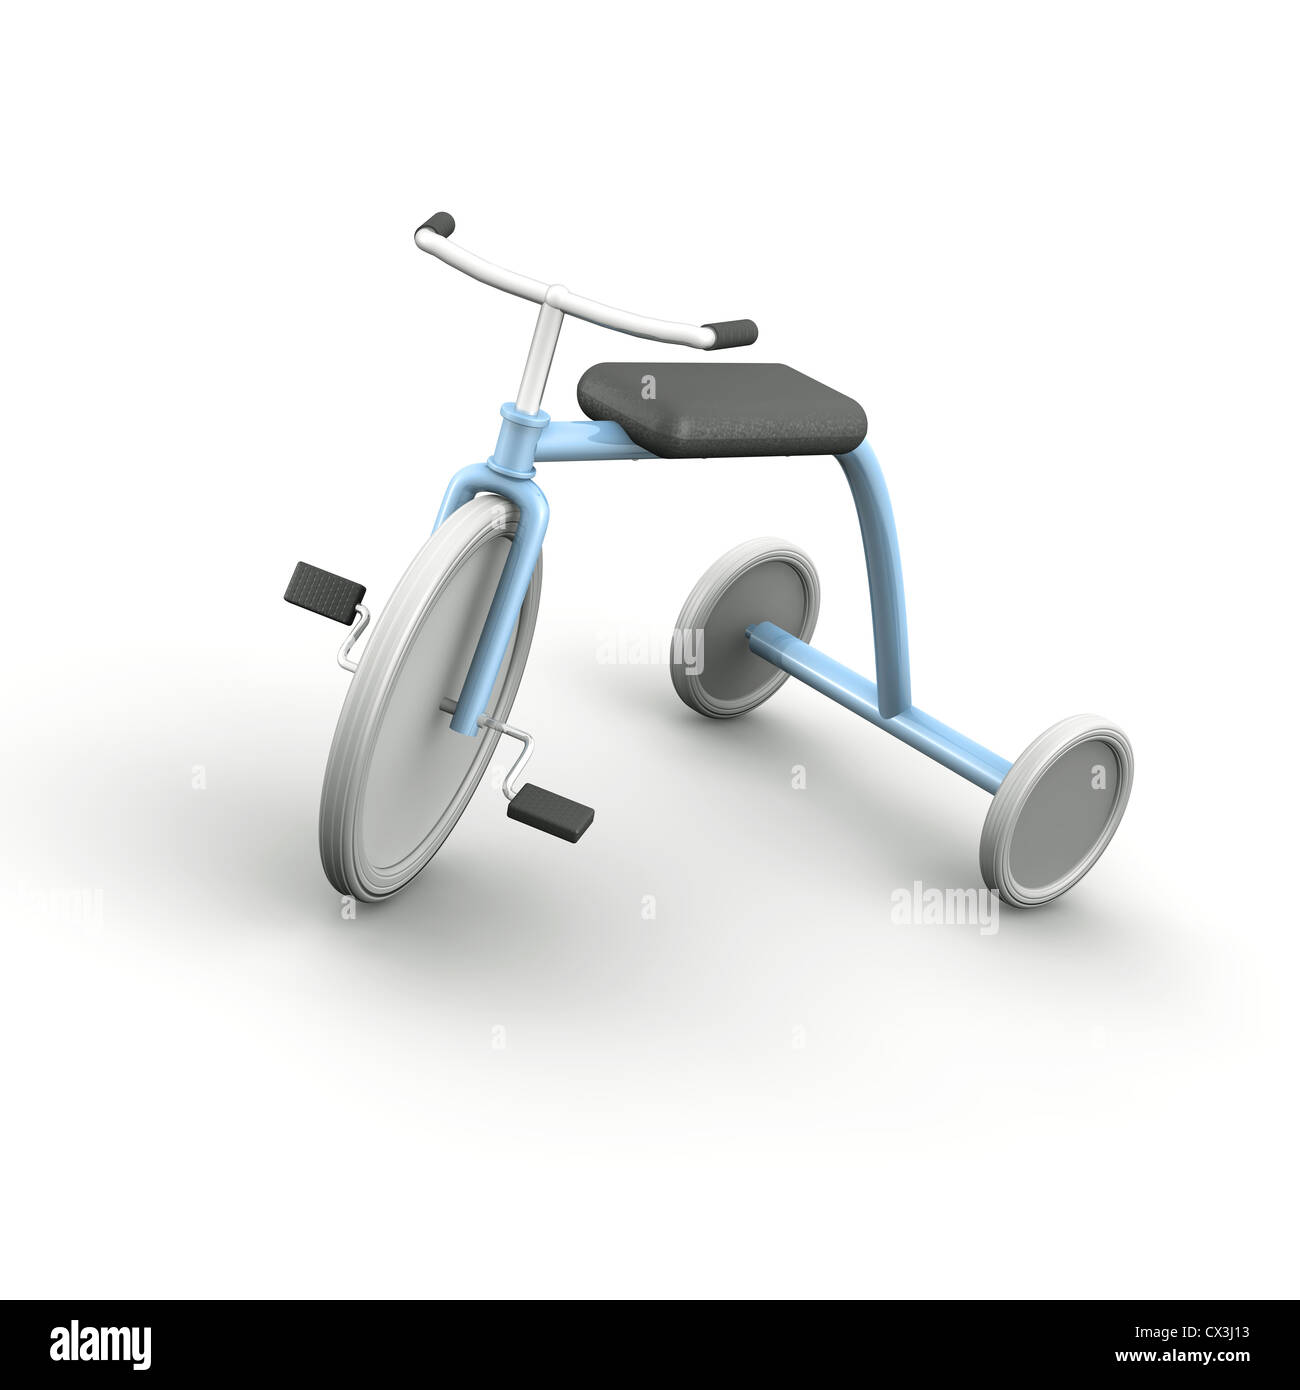 Retro Hellblaues Dreirad mit weissem weissen Reifen auf Hintergrund - uno azul triciclo con ruedas blancas sobre fondo blanco. Foto de stock